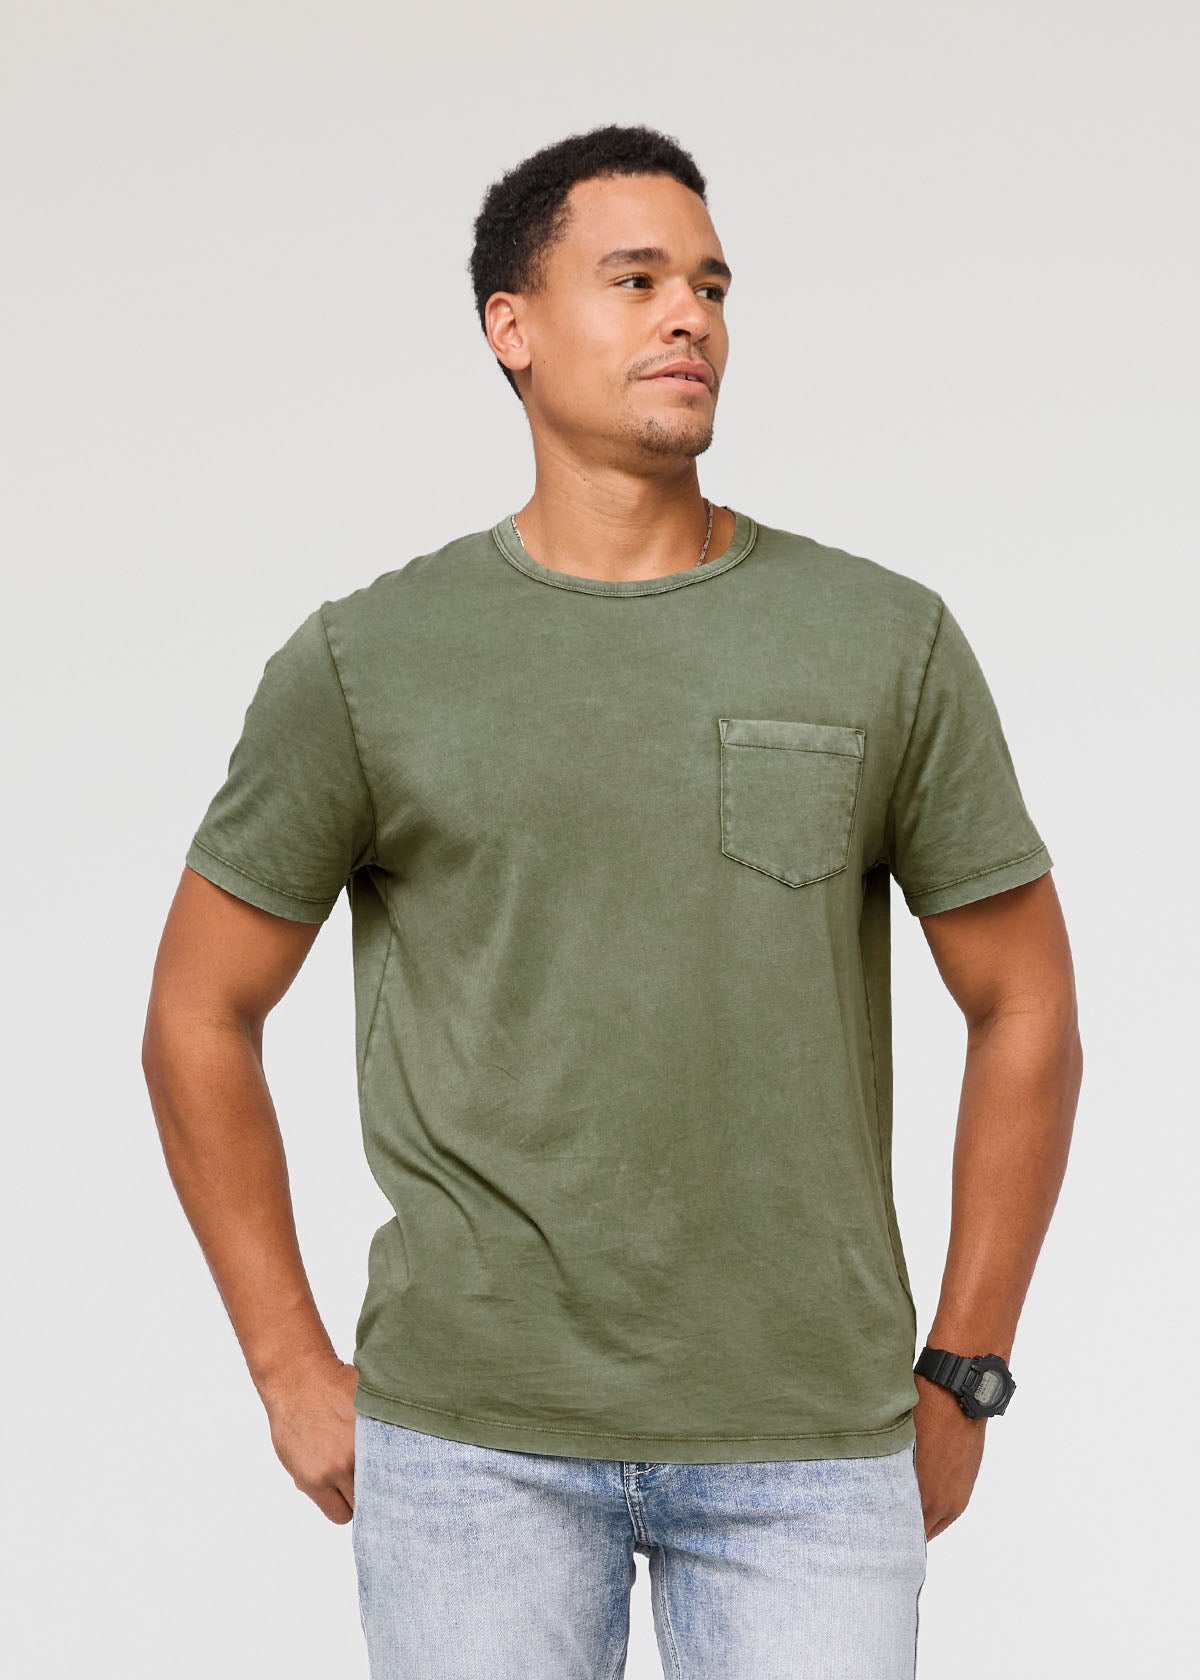 mens pima cotton vintage style green t-shirt front